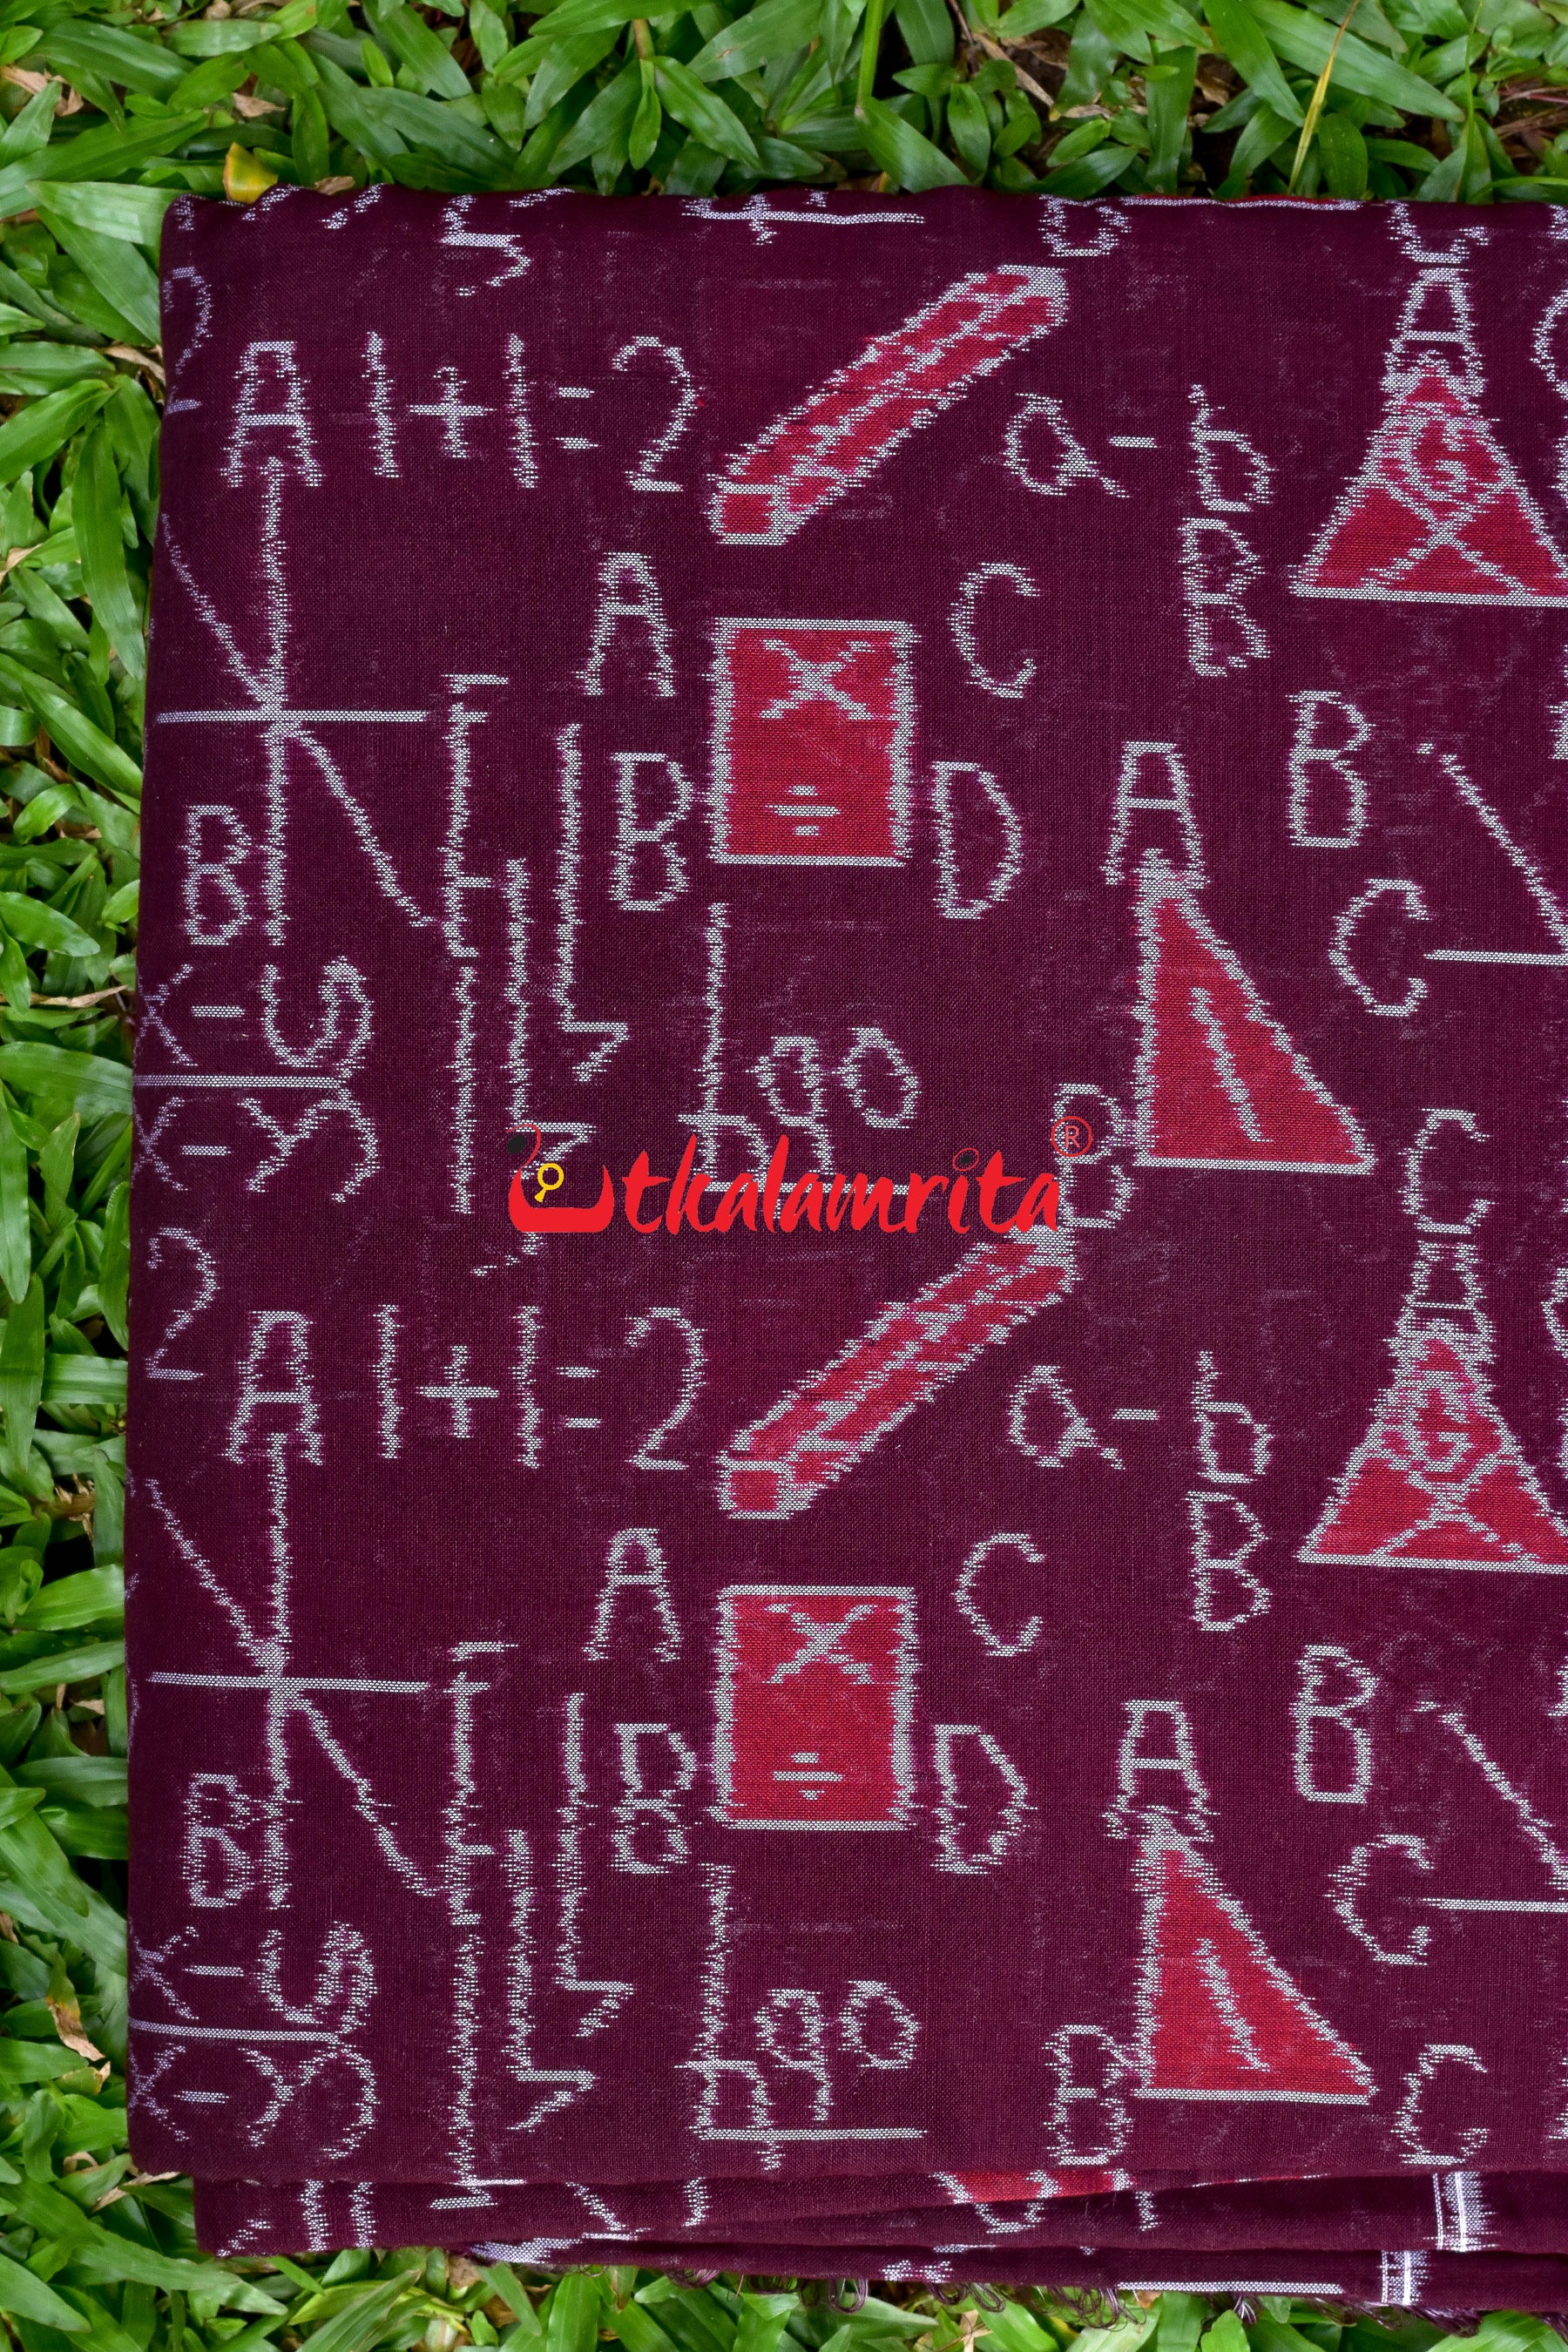 Coffee Math Silk (Fabric)